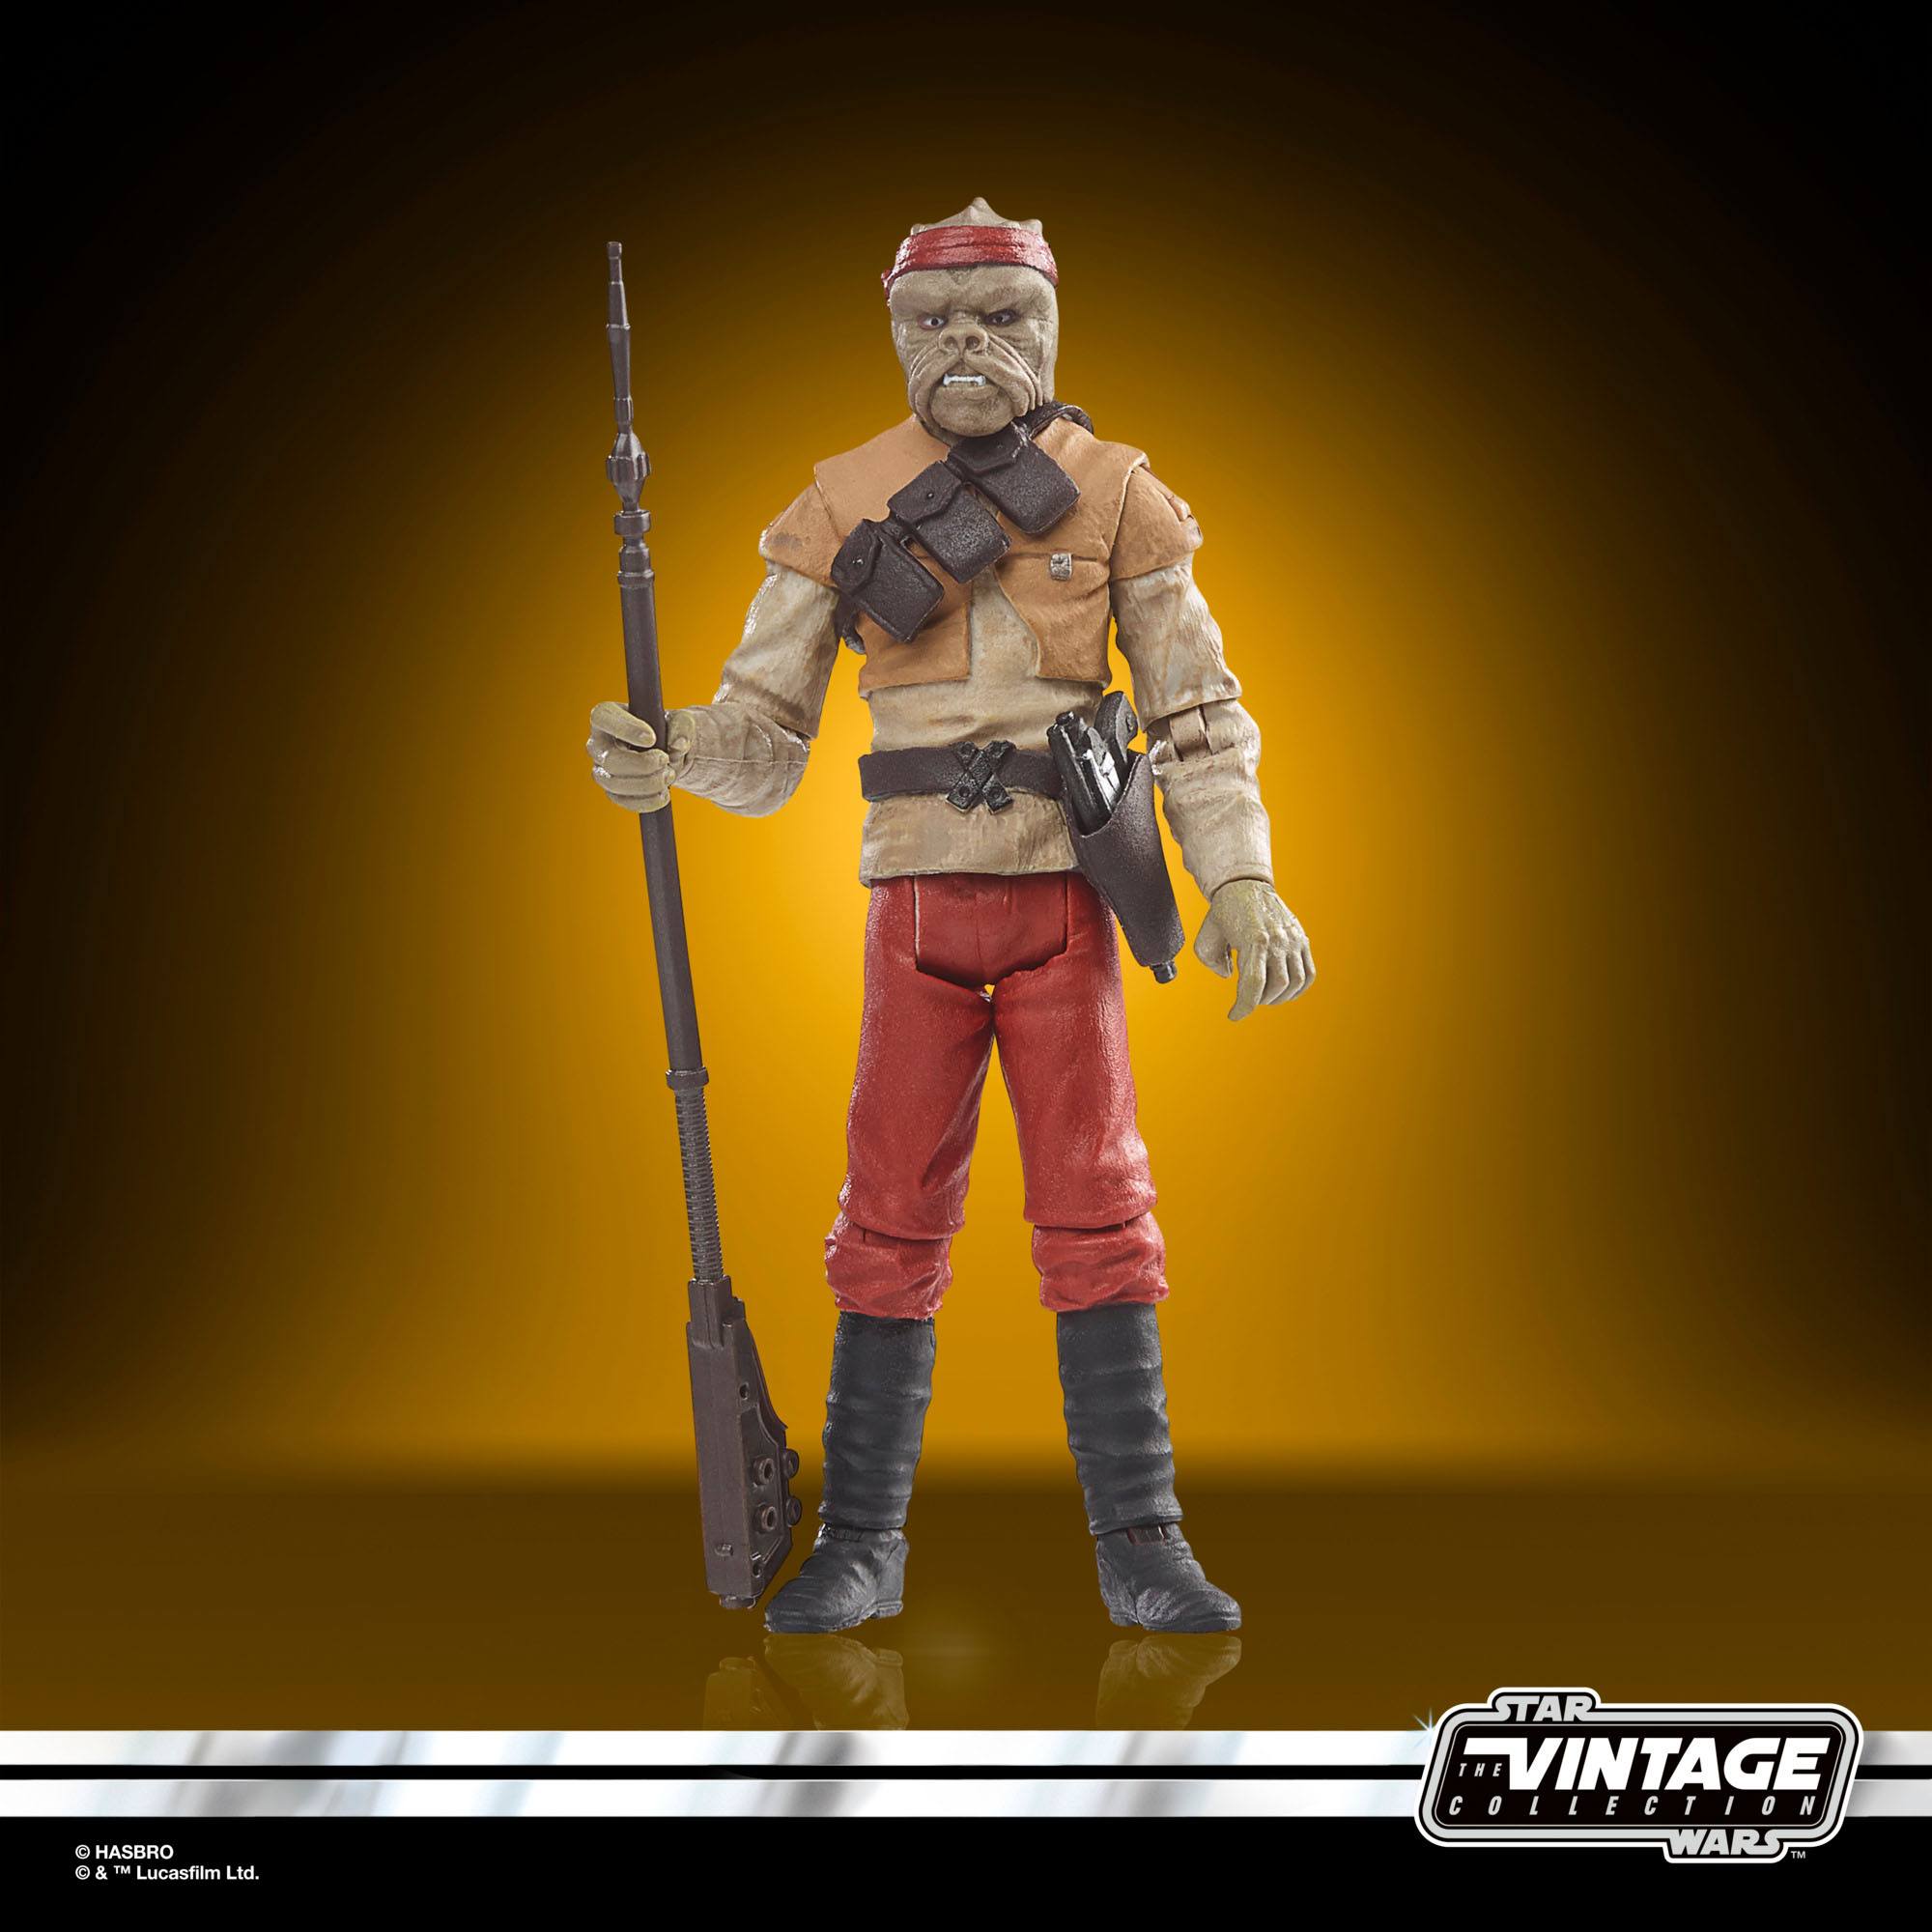 Star Wars Episode VI Vintage Collection Actionfigur Kithaba (Skiff Guard) 10 cm F73385L00 5010996124777